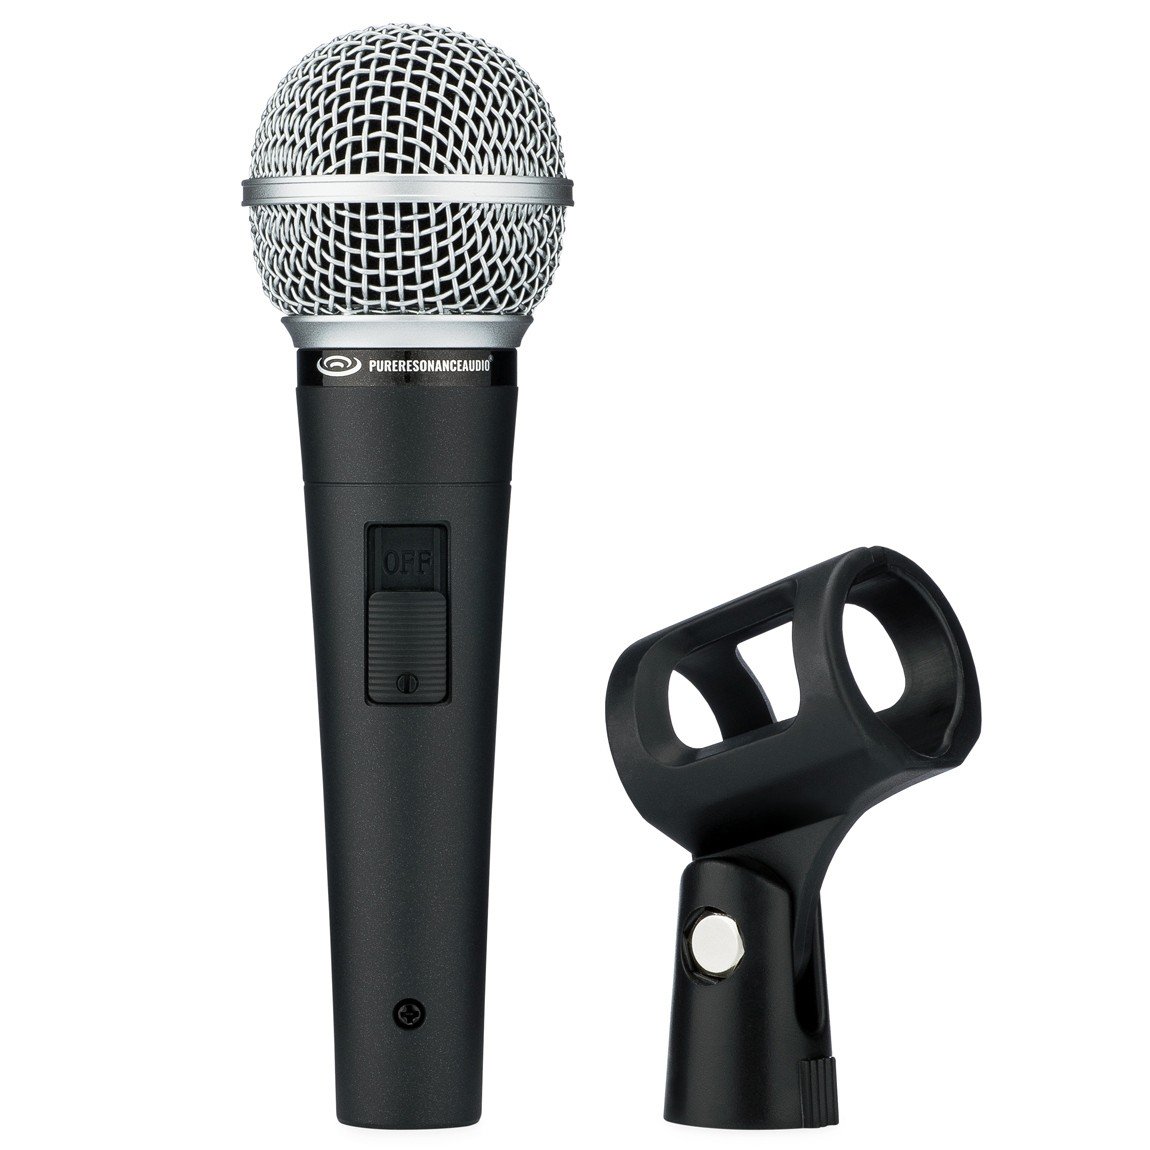 Pure Resonance Audio UC1S Microphone and Clip